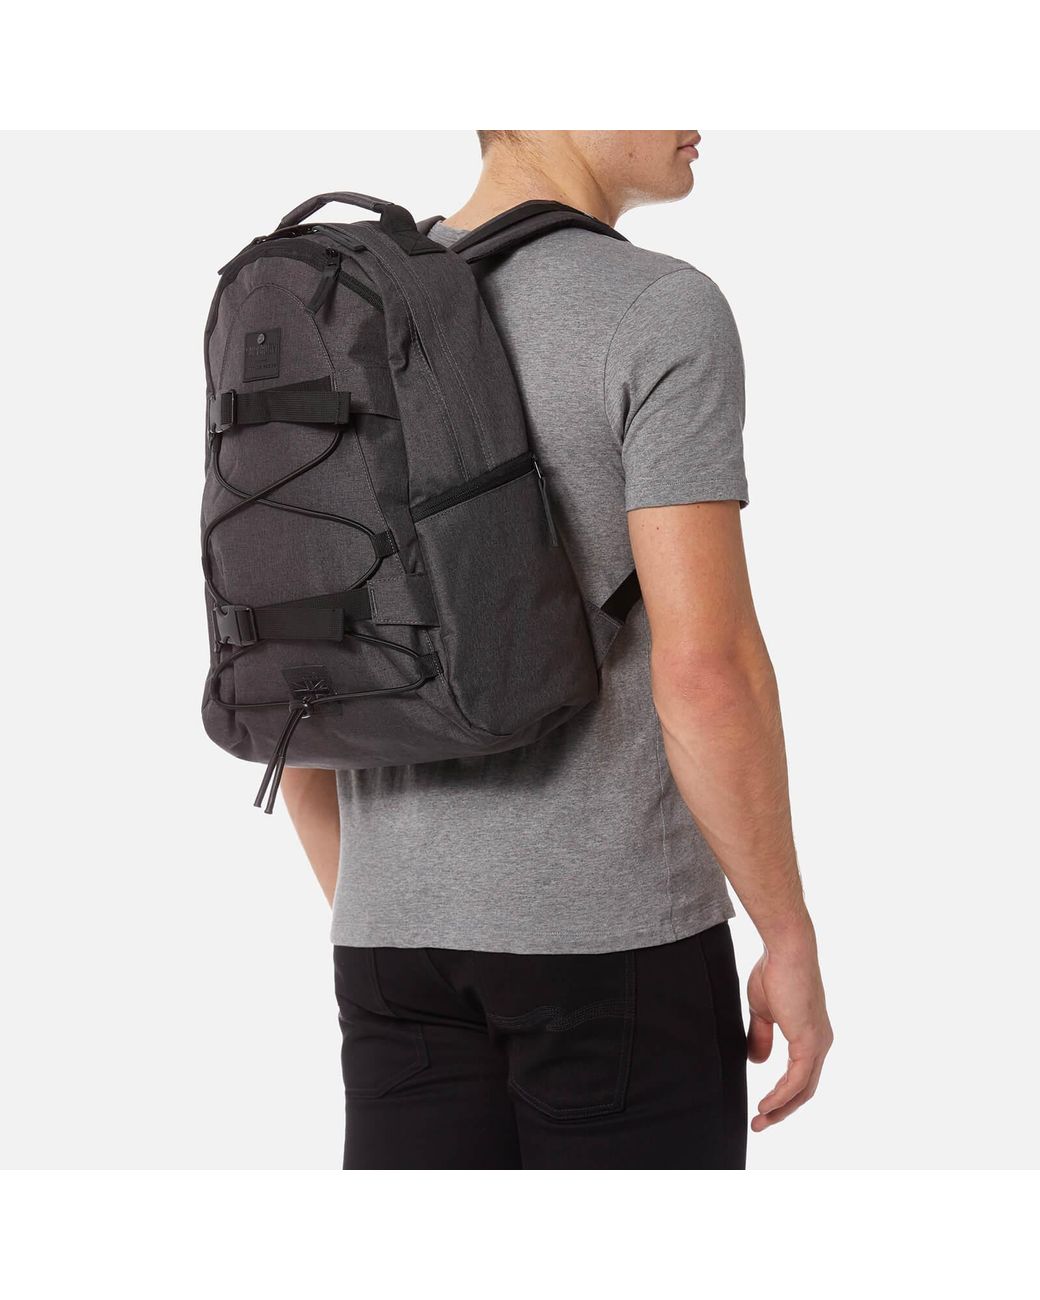 Superdry Surplus Goods Backpack for Men | Lyst UK